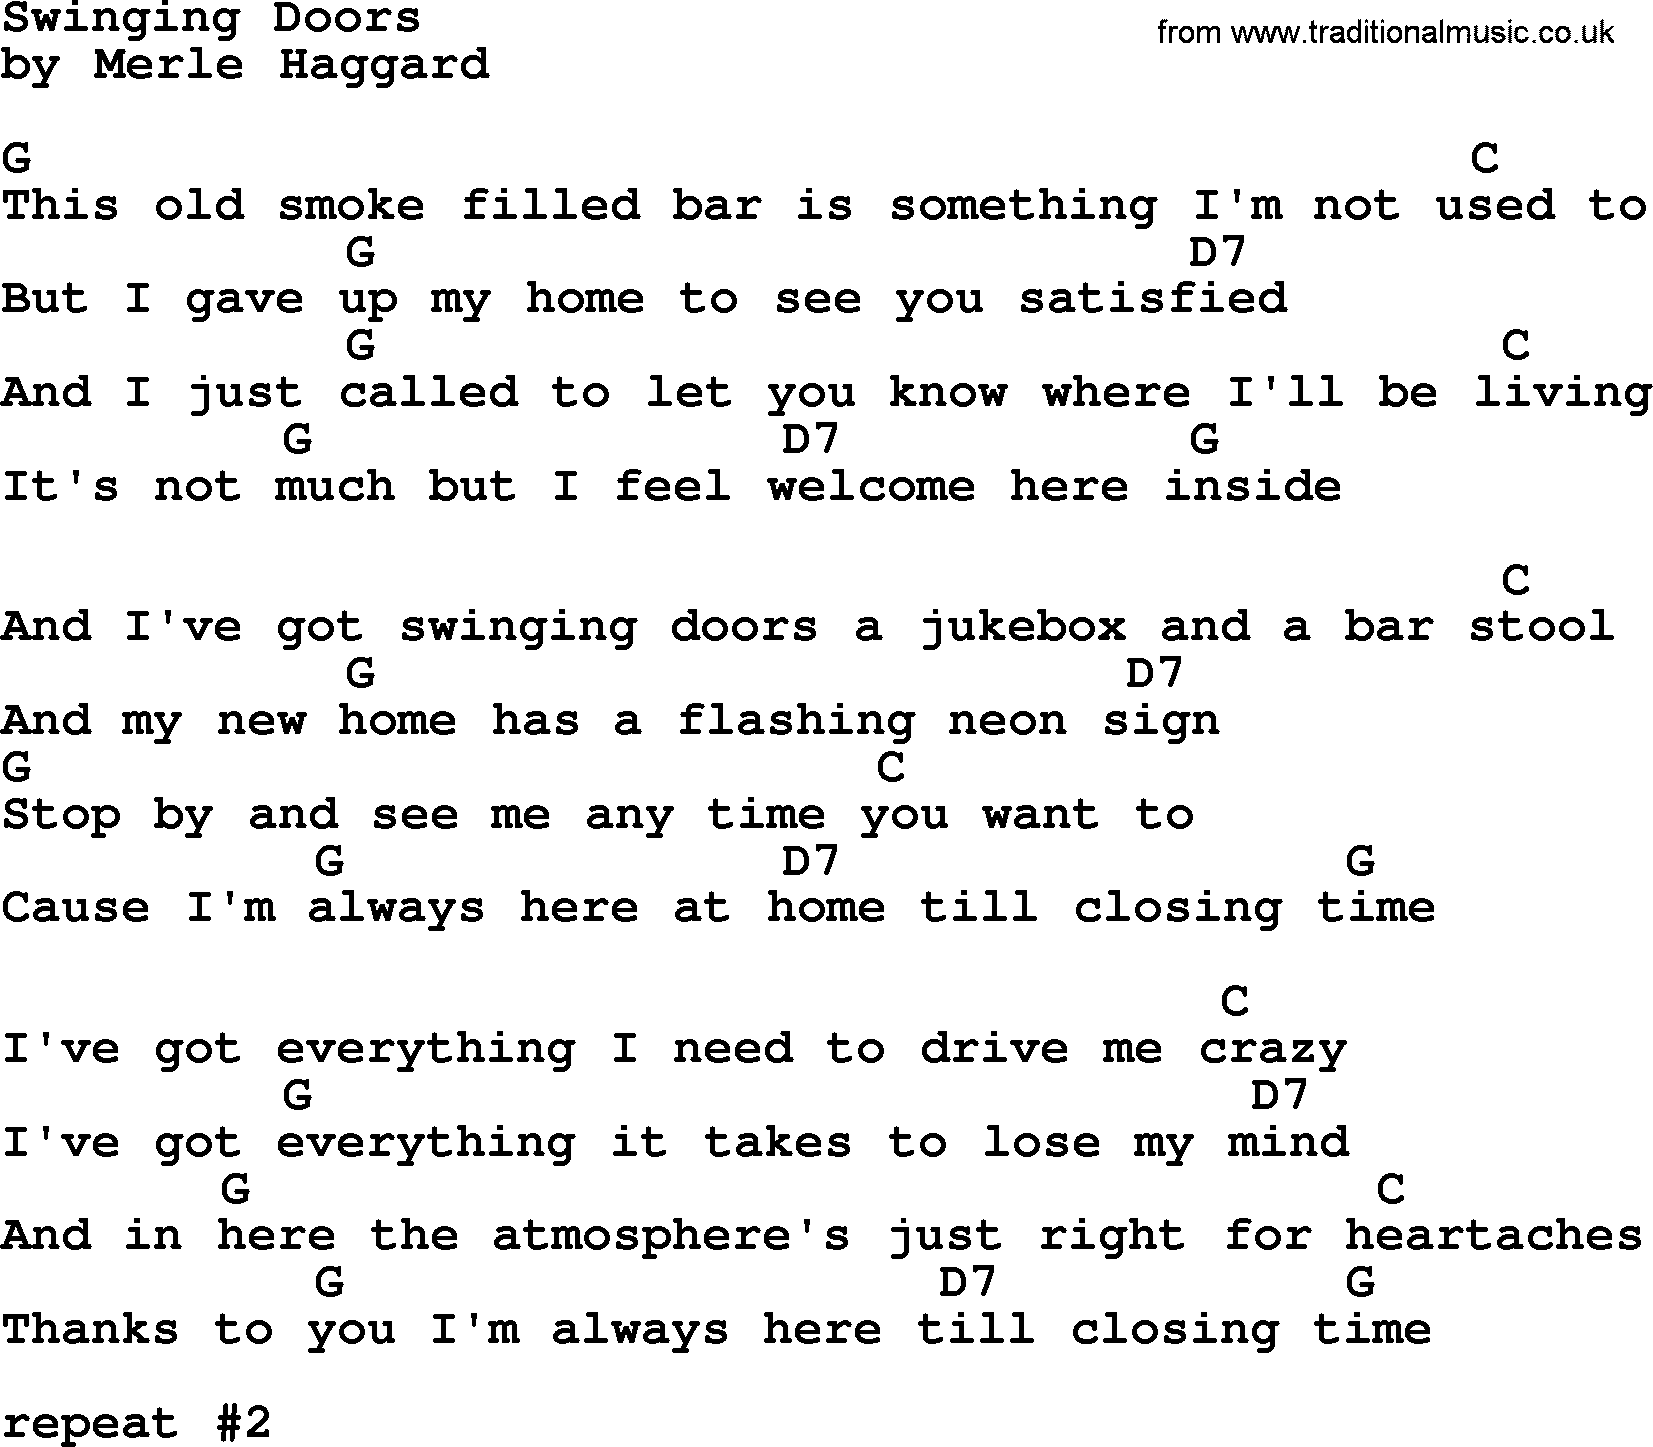 Merle Haggard song: Swinging Doors, lyrics and chords